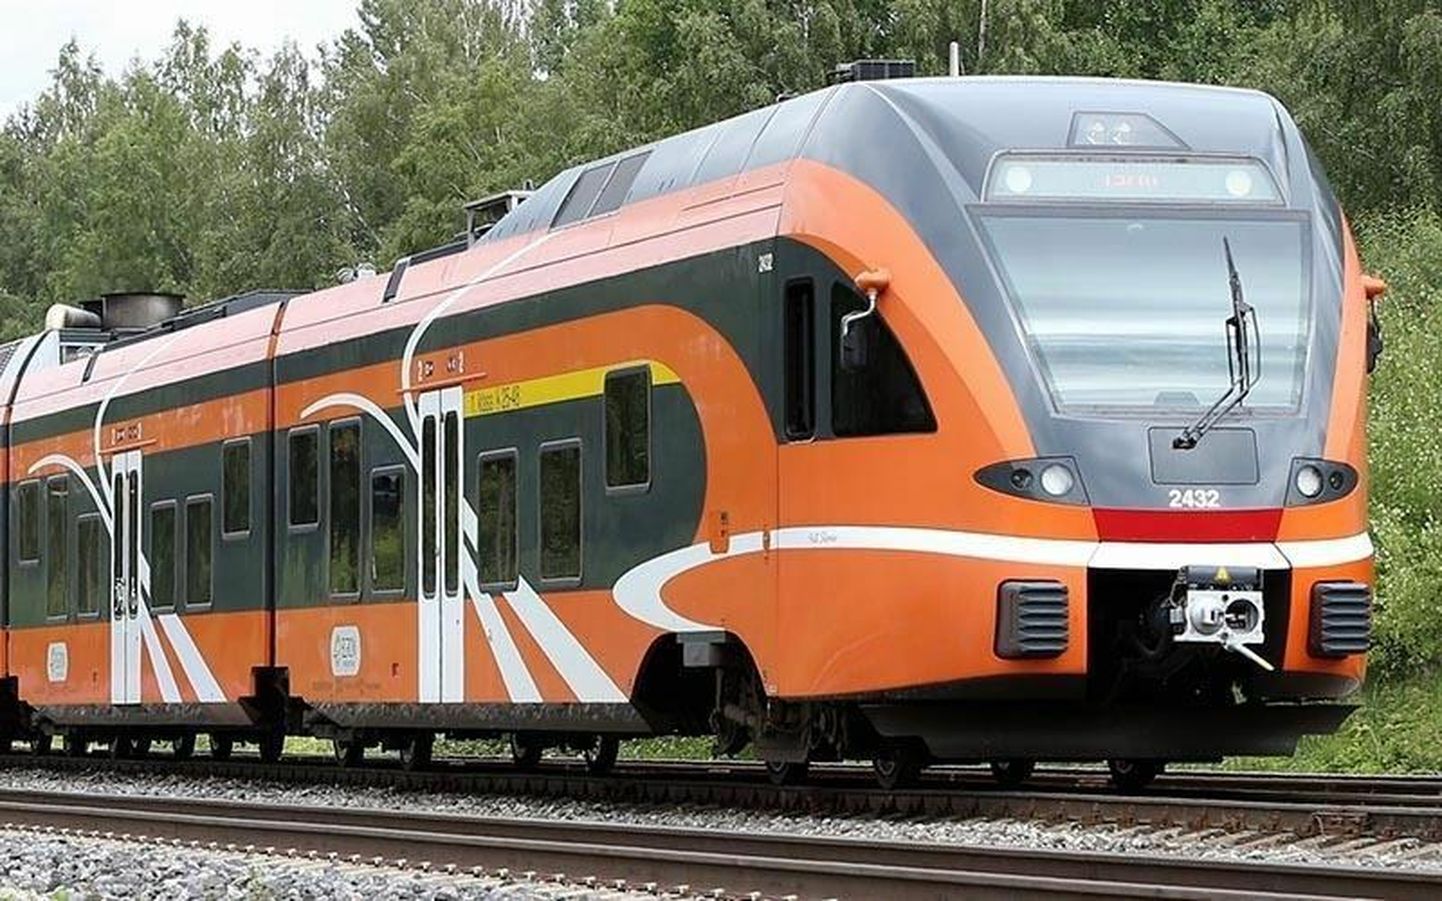 Passenger train services between Tallinn and Tartu and Tallinn and Narva were disrupted.